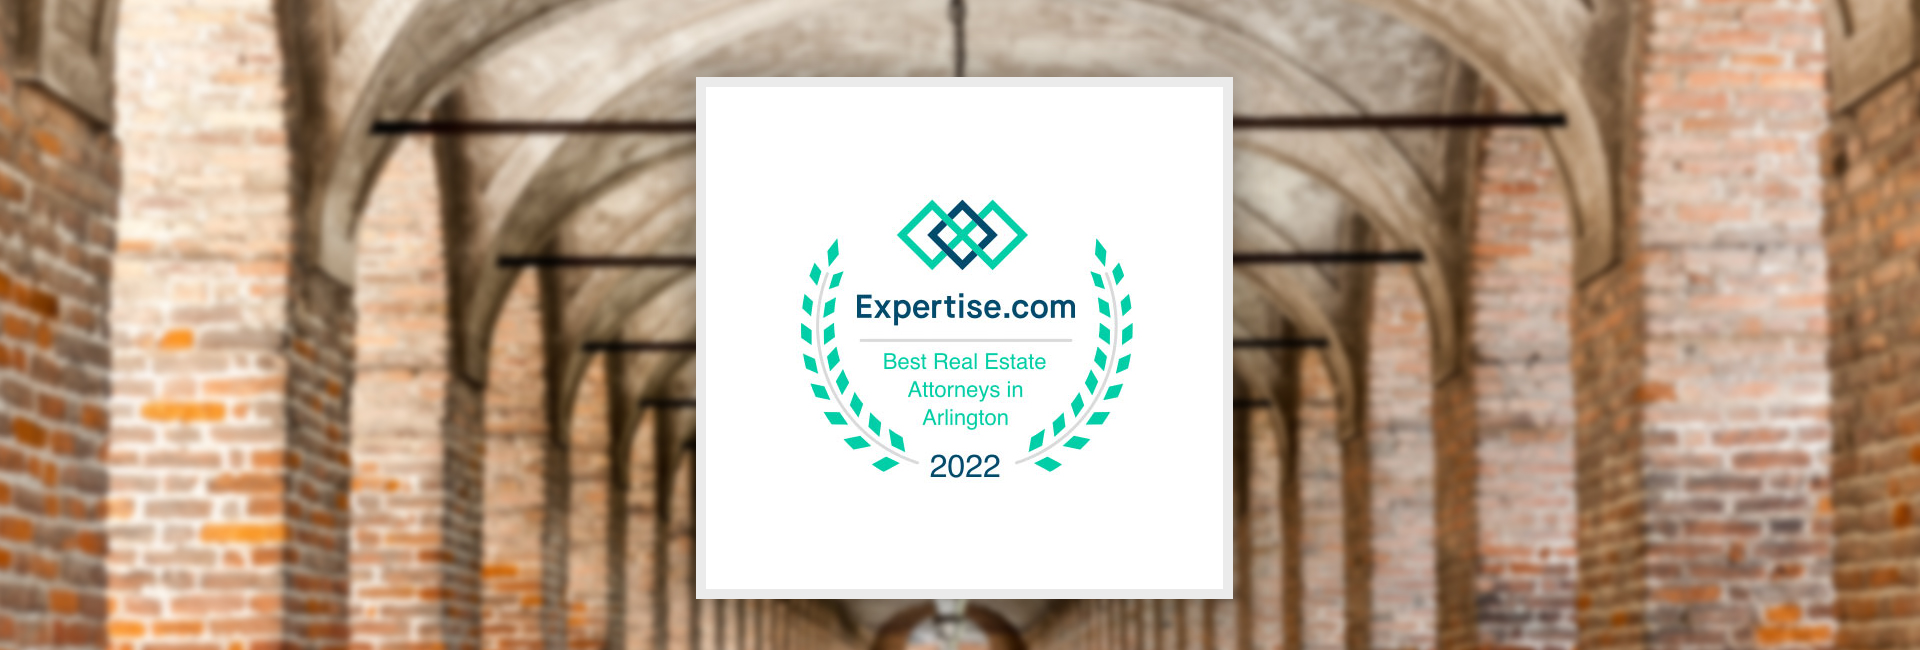 Expertise.com - Best Real Estate Attorneys in Alington